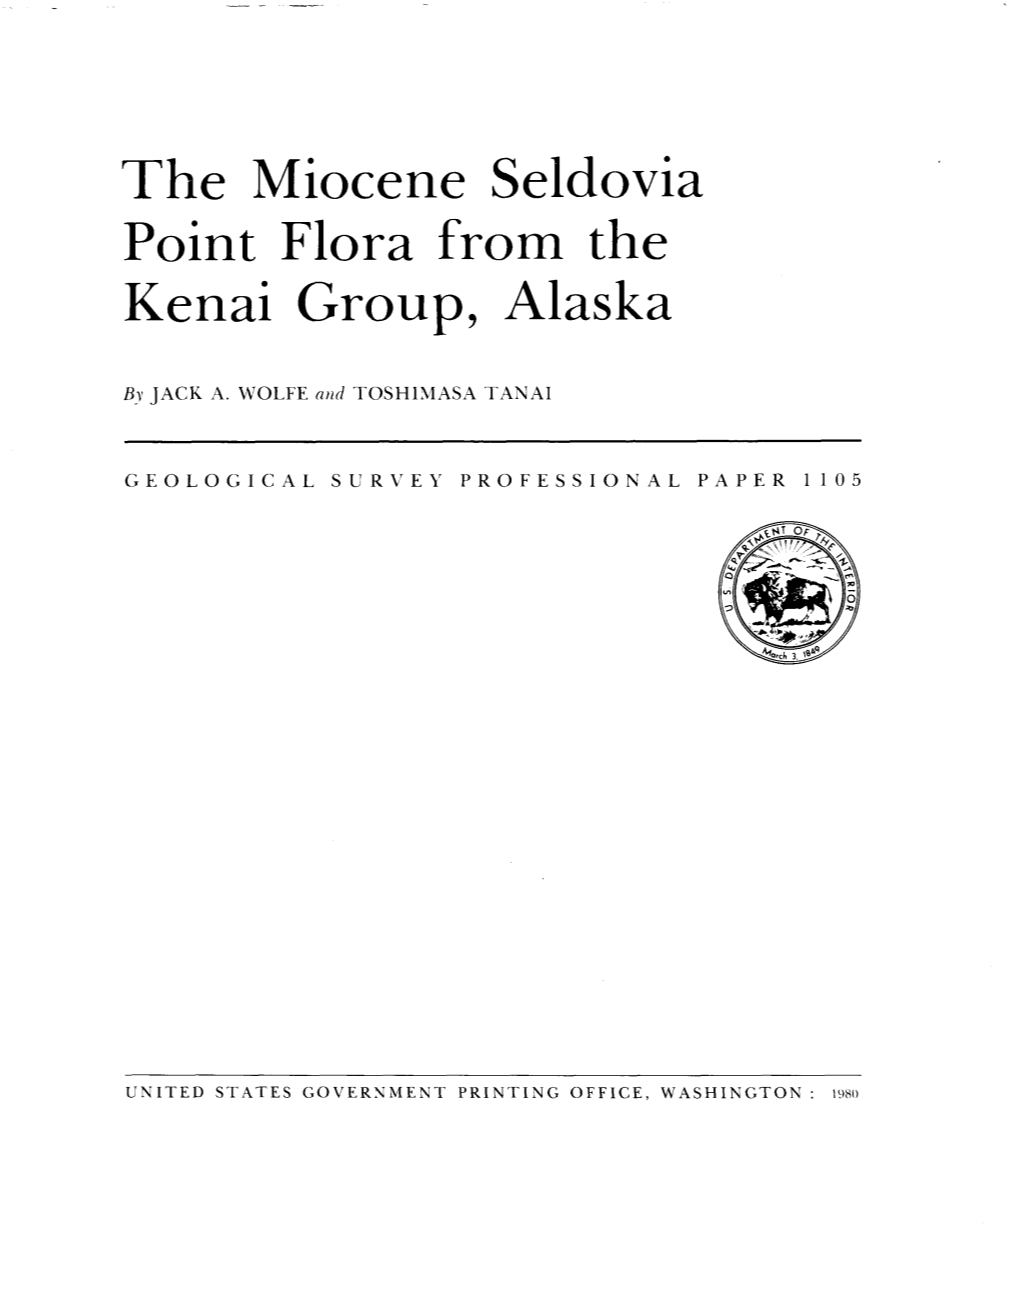 The Miocene Seldovia Point Flora from the Kenai Group, Alaska